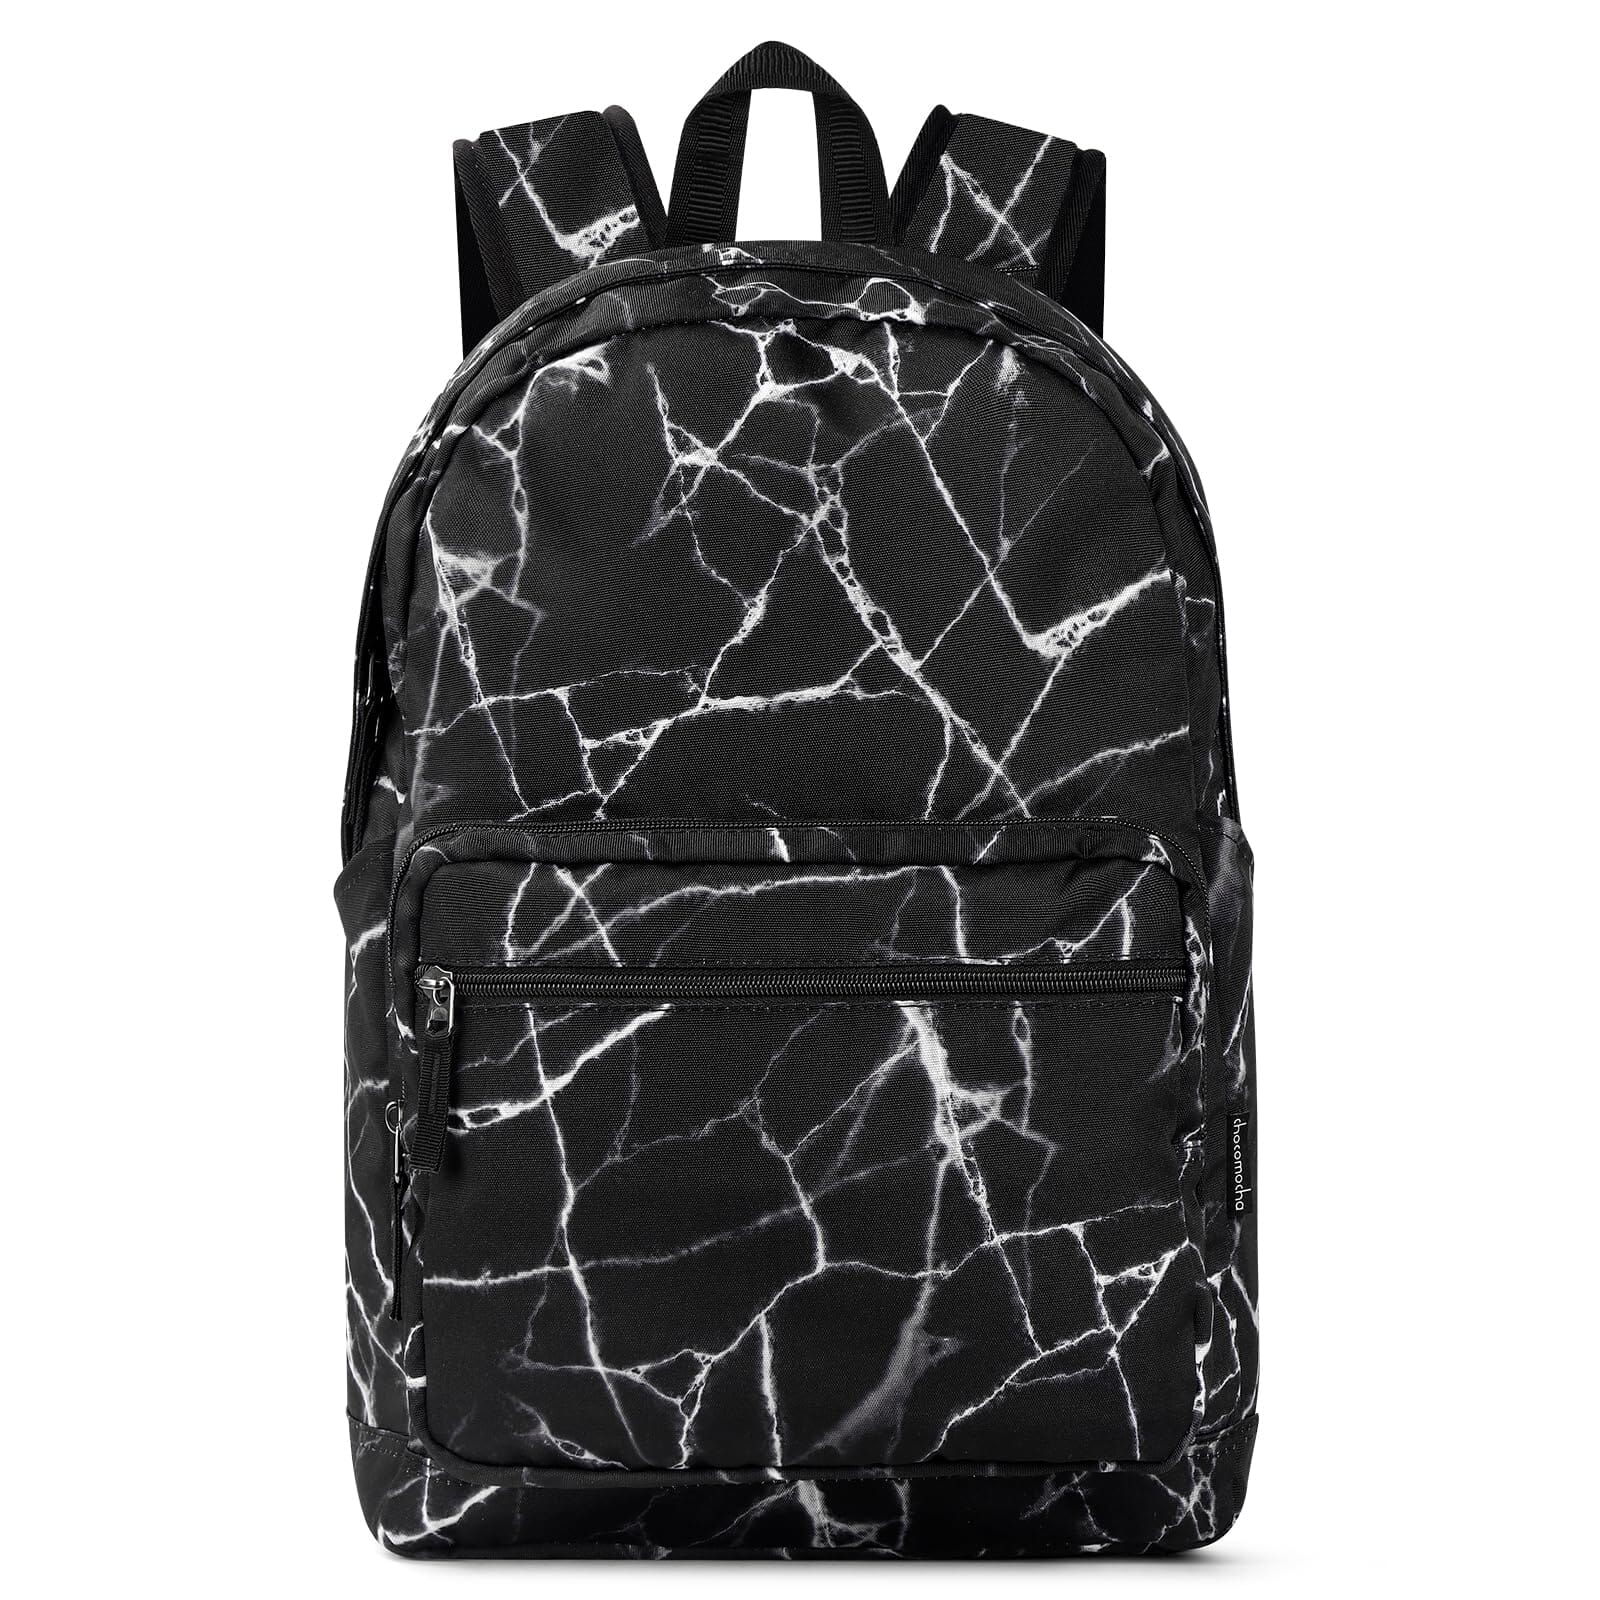 Choco Mocha Black Marble Backpack for Girls Travel School Backpack 17 Inch chocomochakids 